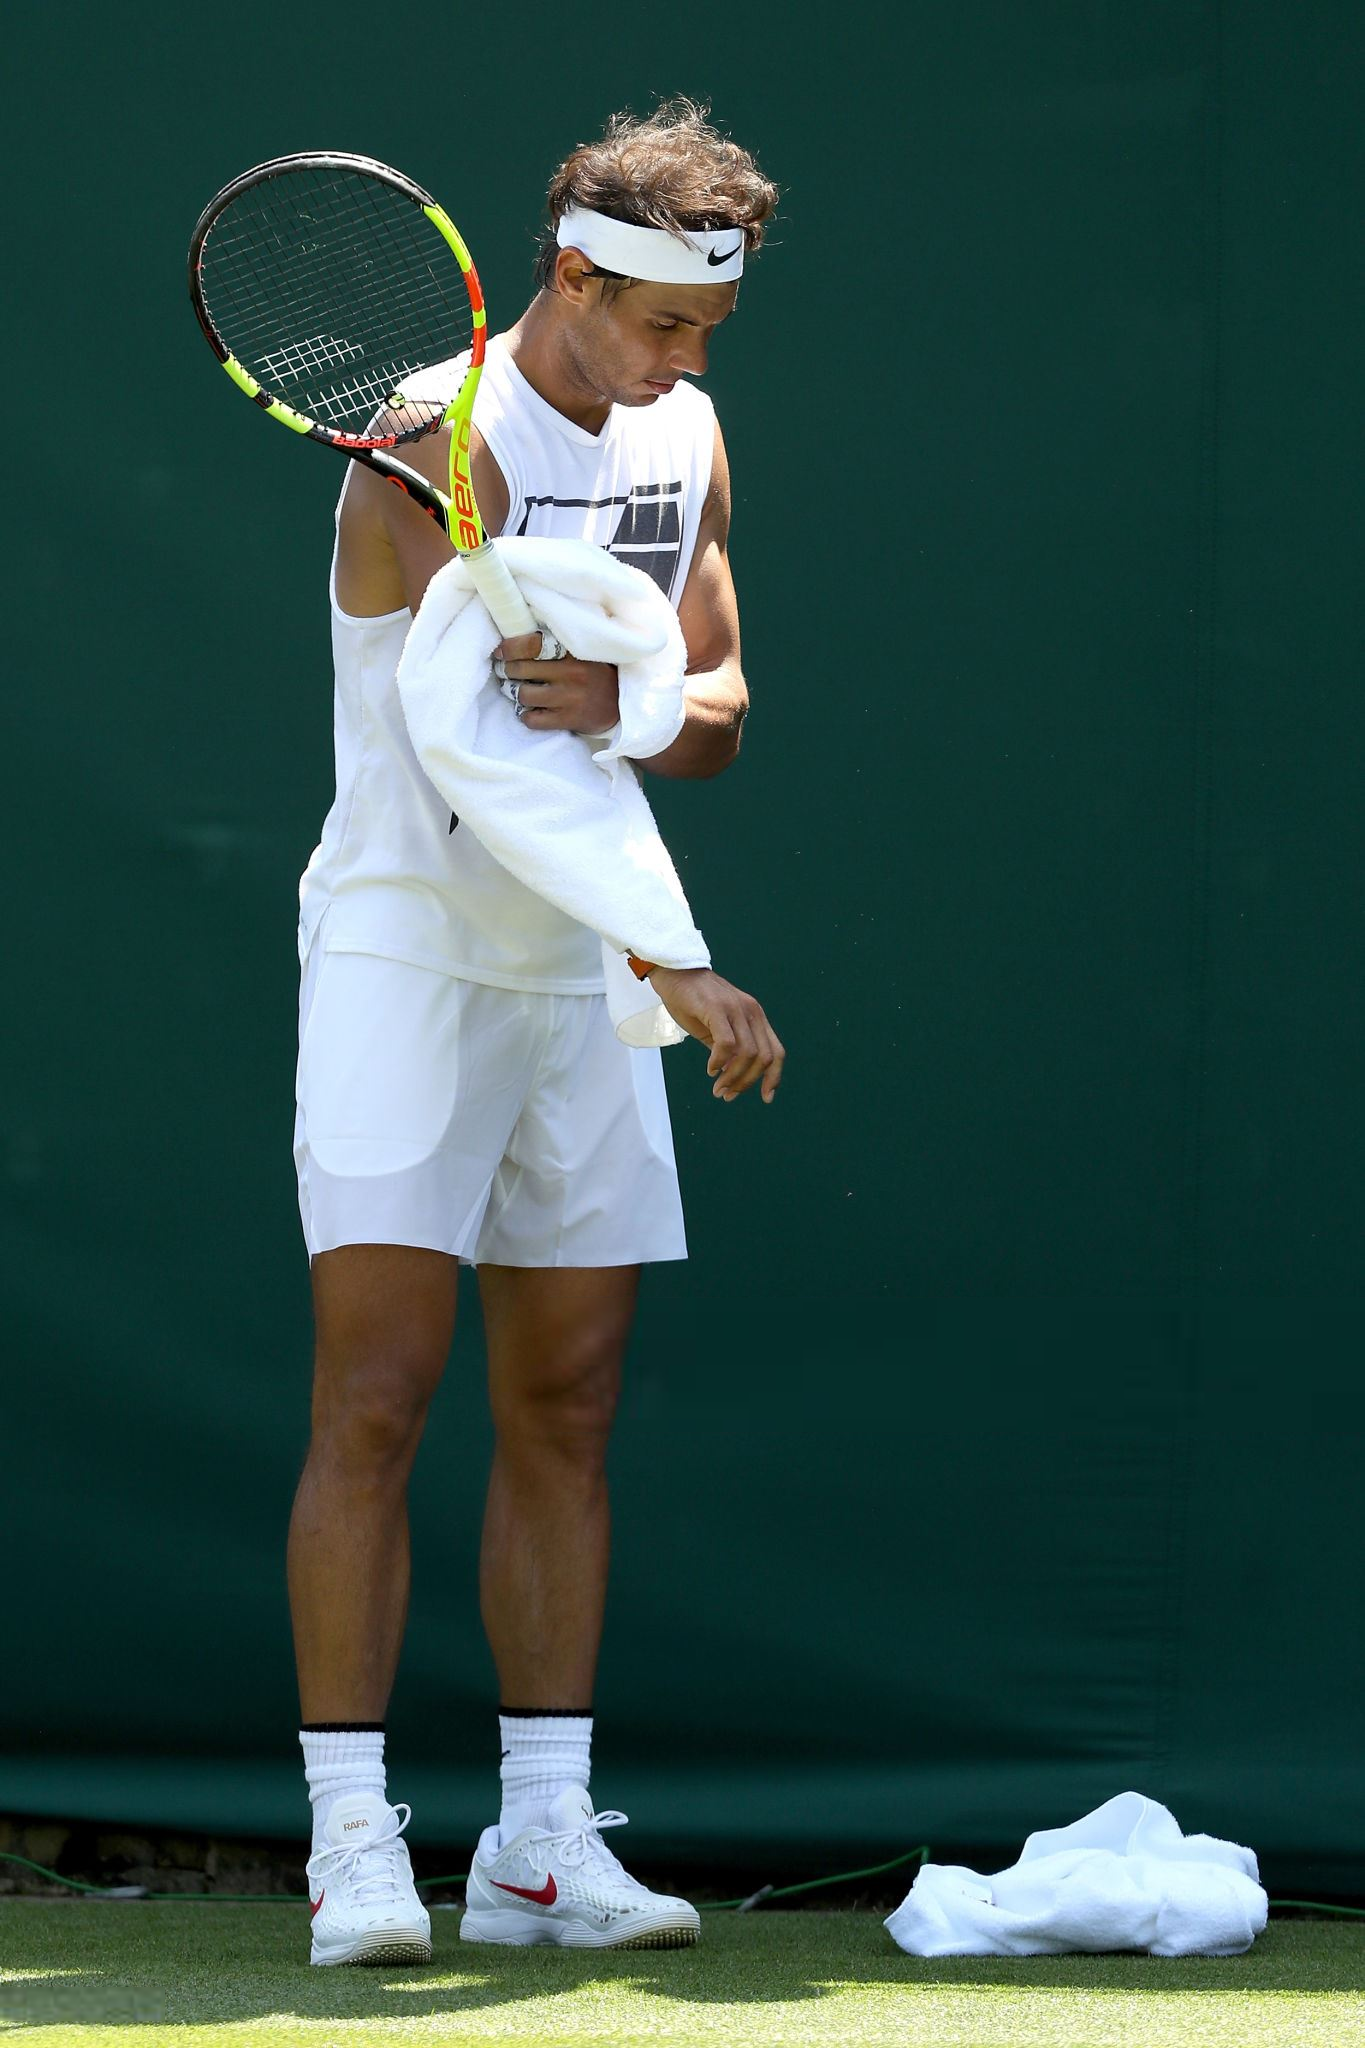 Wimbledon 2018: Thursday practice photos – Rafael Nadal Fans